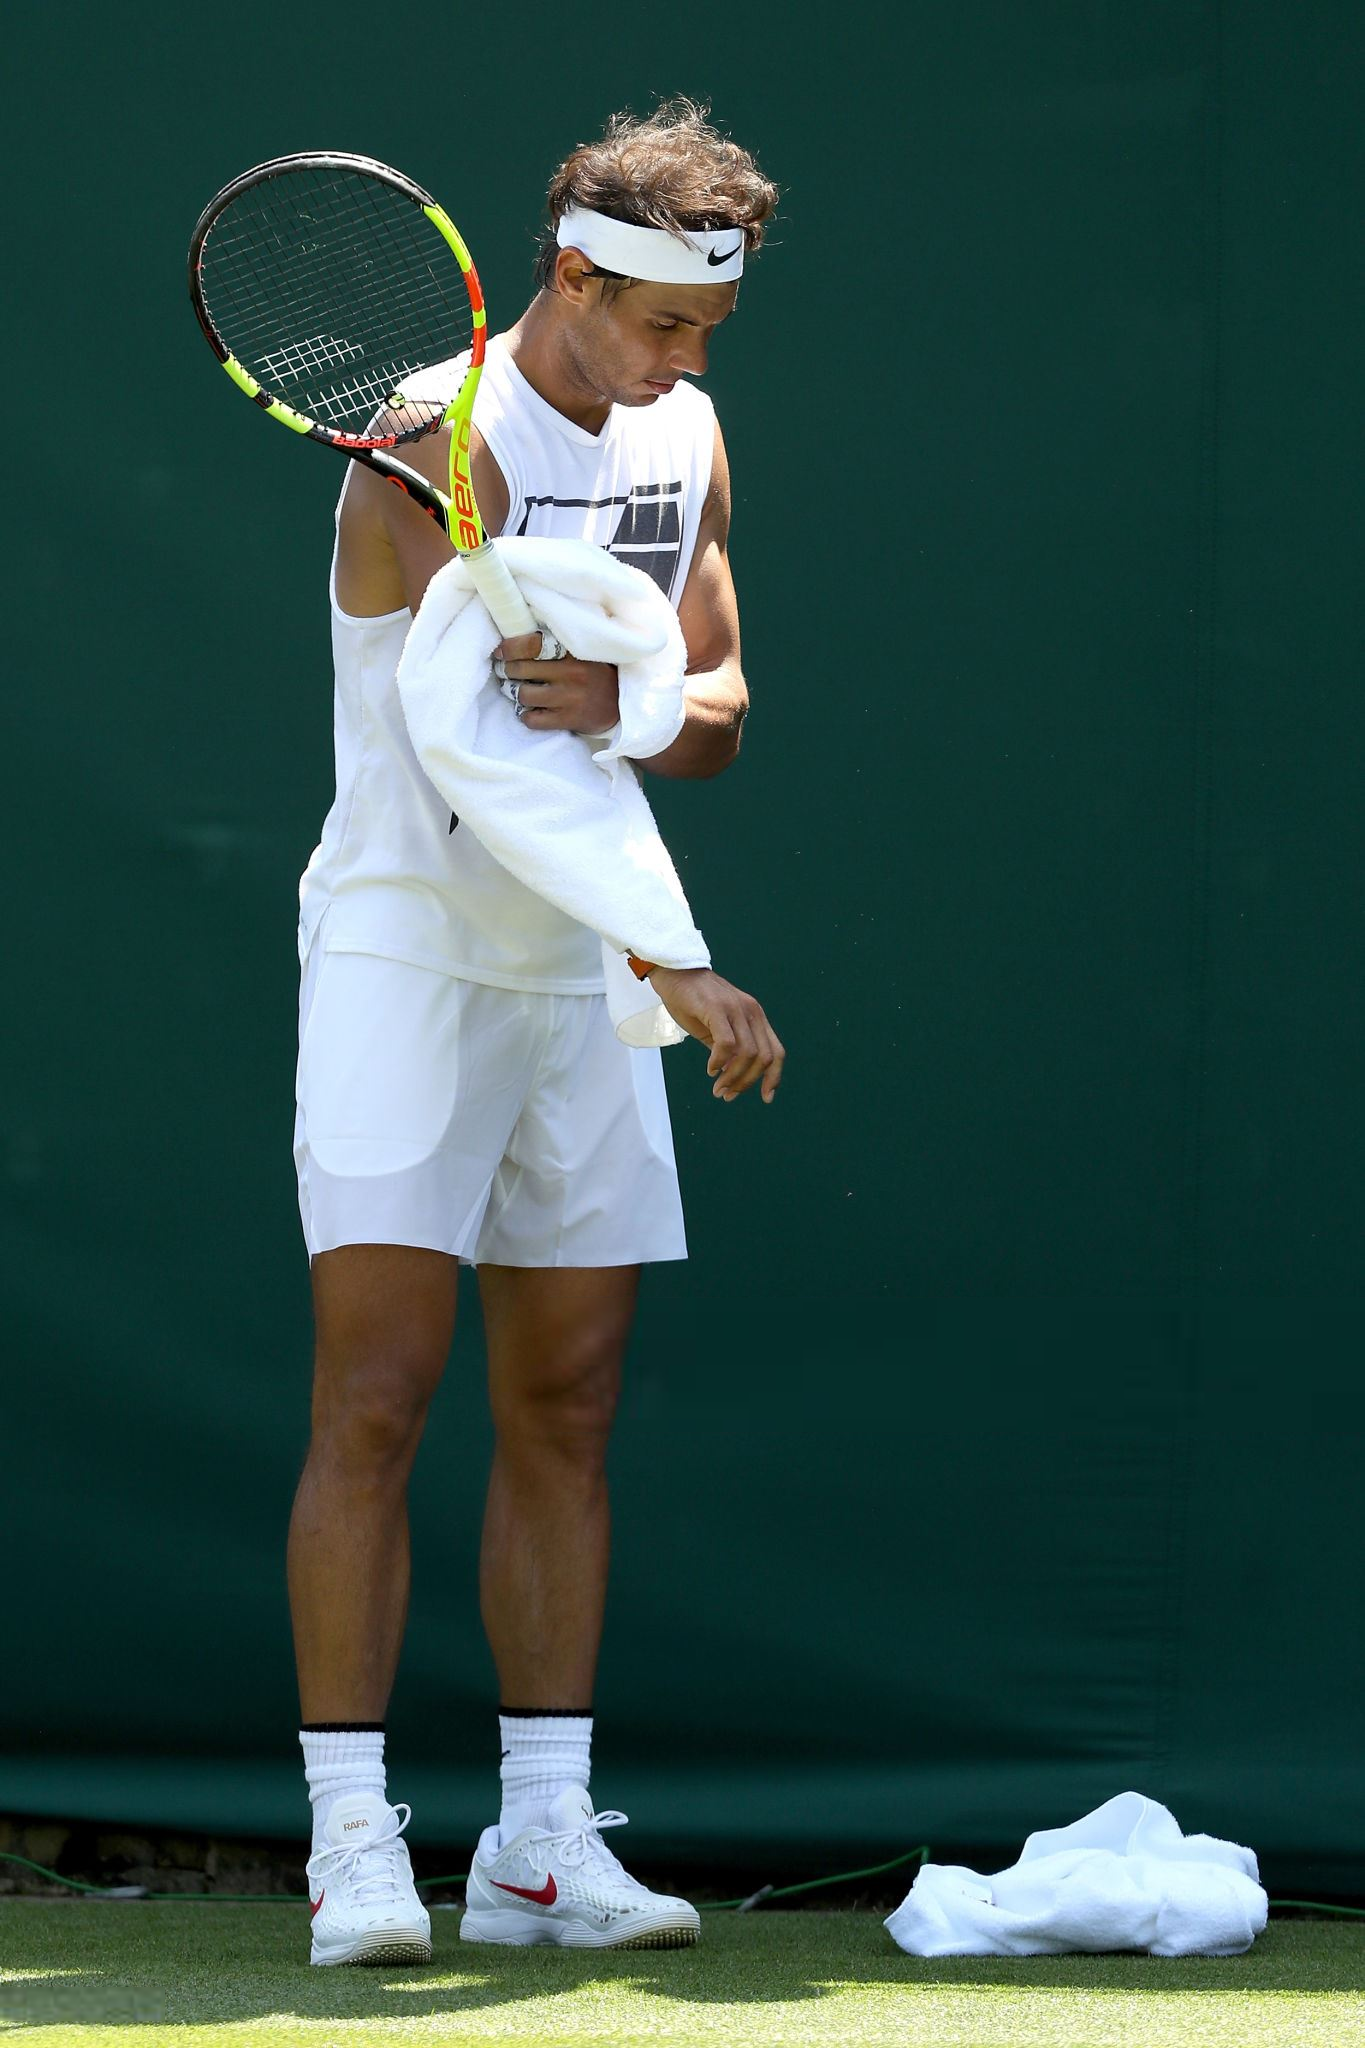 Wimbledon 2018: Thursday practice photos – Rafael Nadal Fans